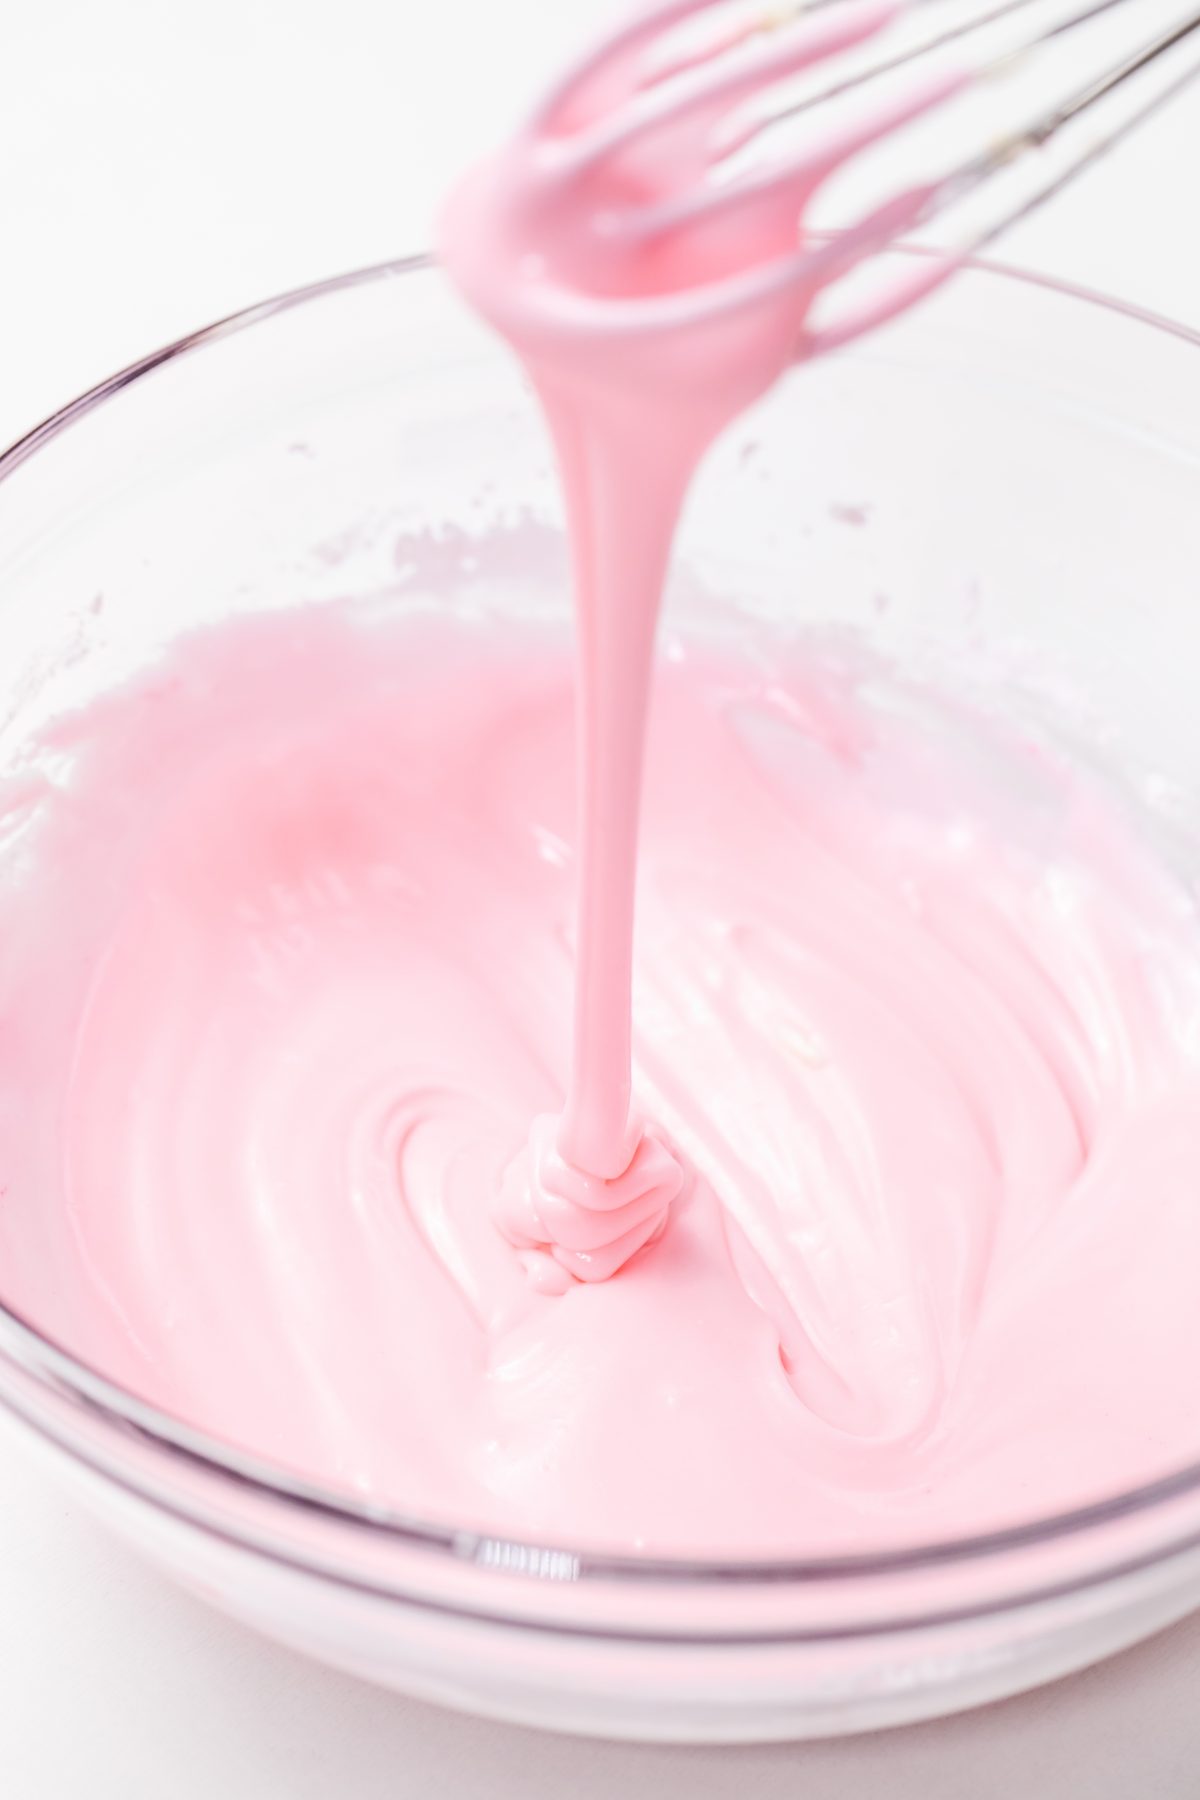 Stir in pink food coloring to frosting mixture